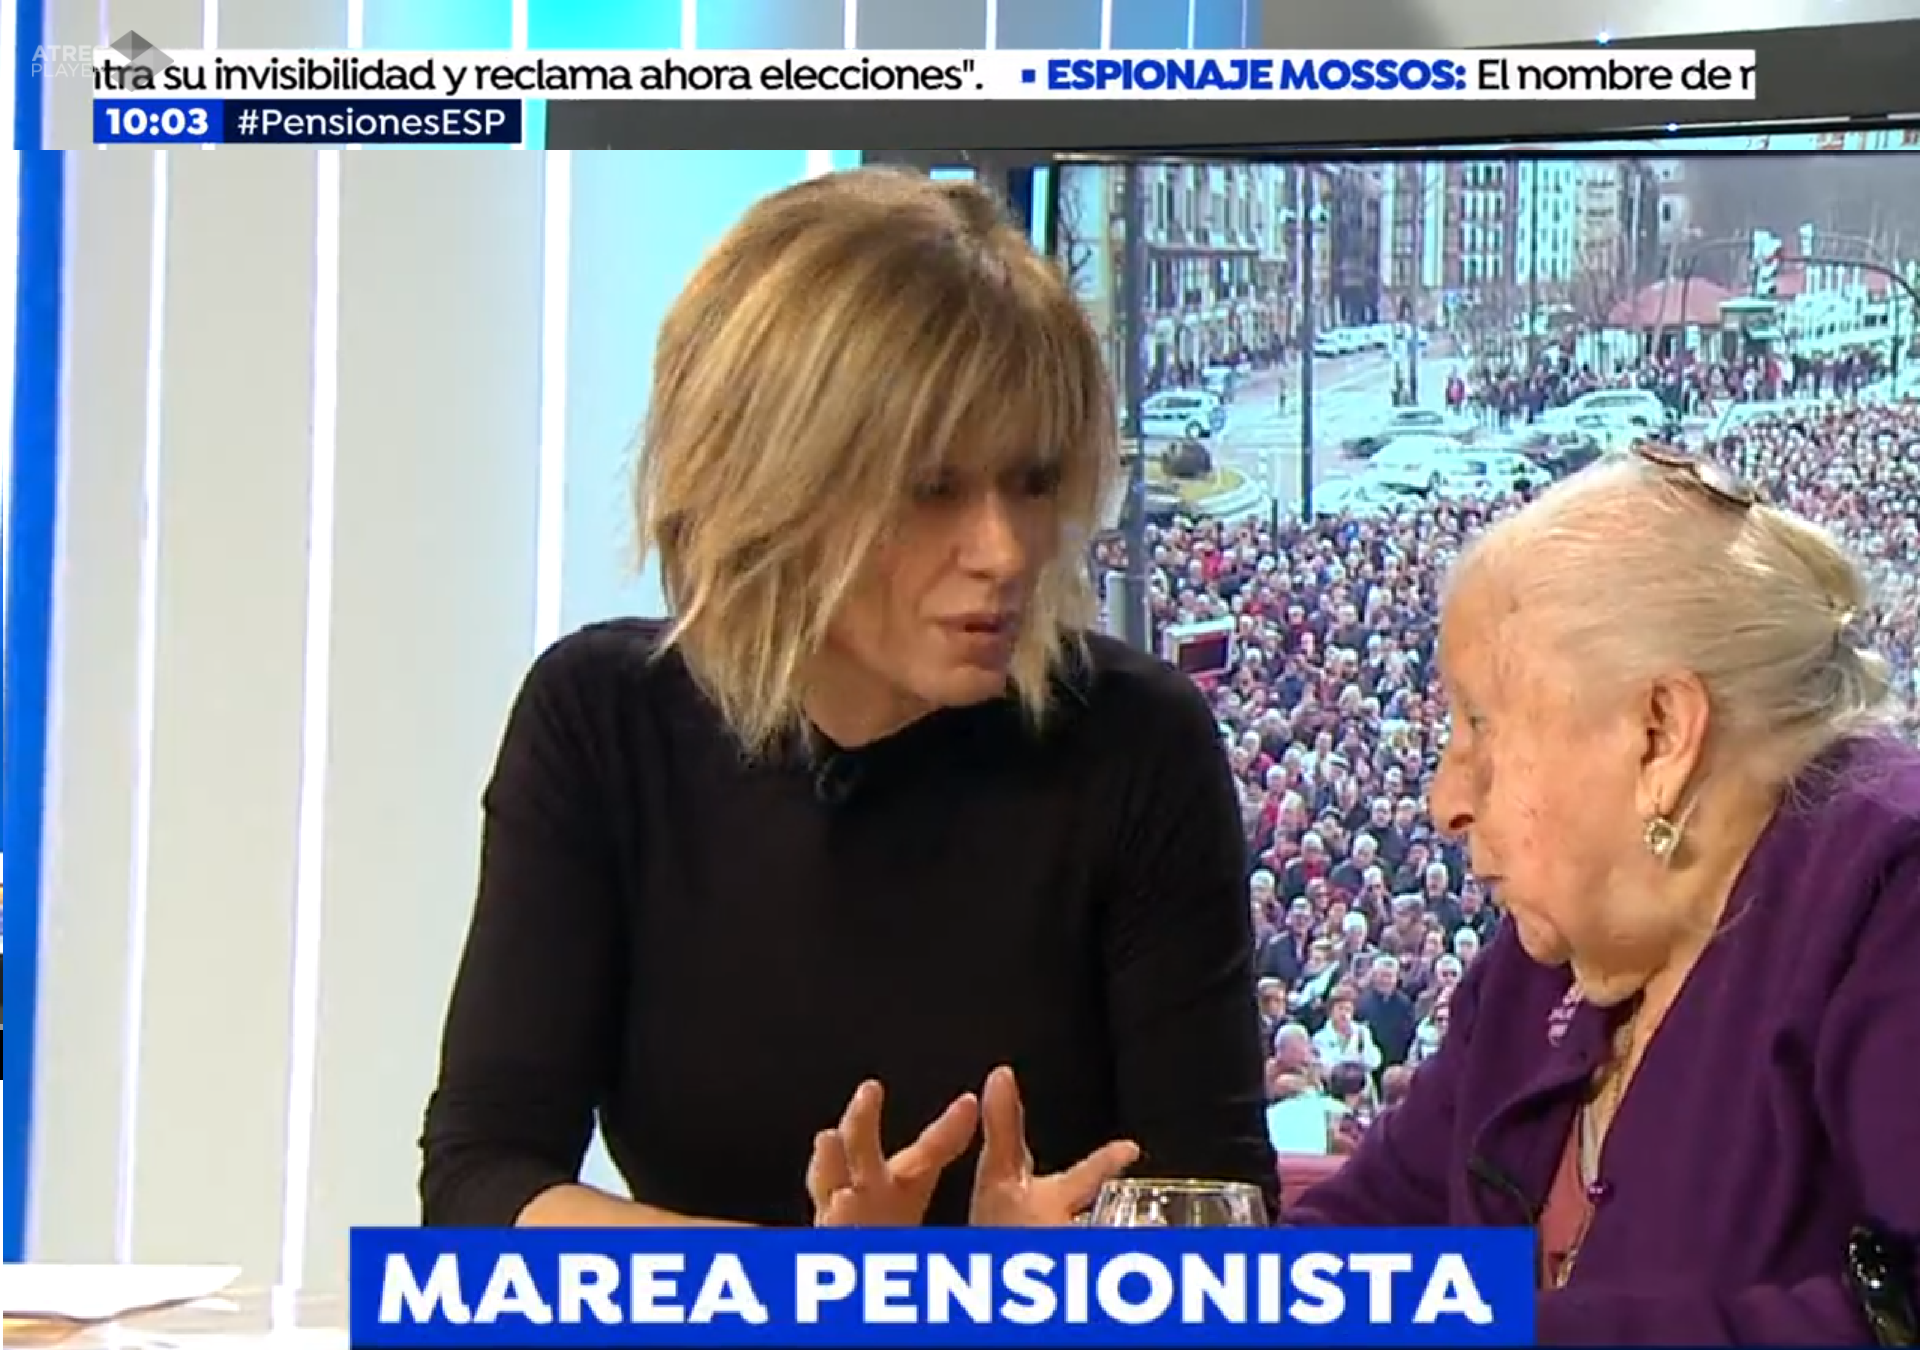 Insulten Griso per espantar una pensionista: 'Si vota Podemos será Grecia'